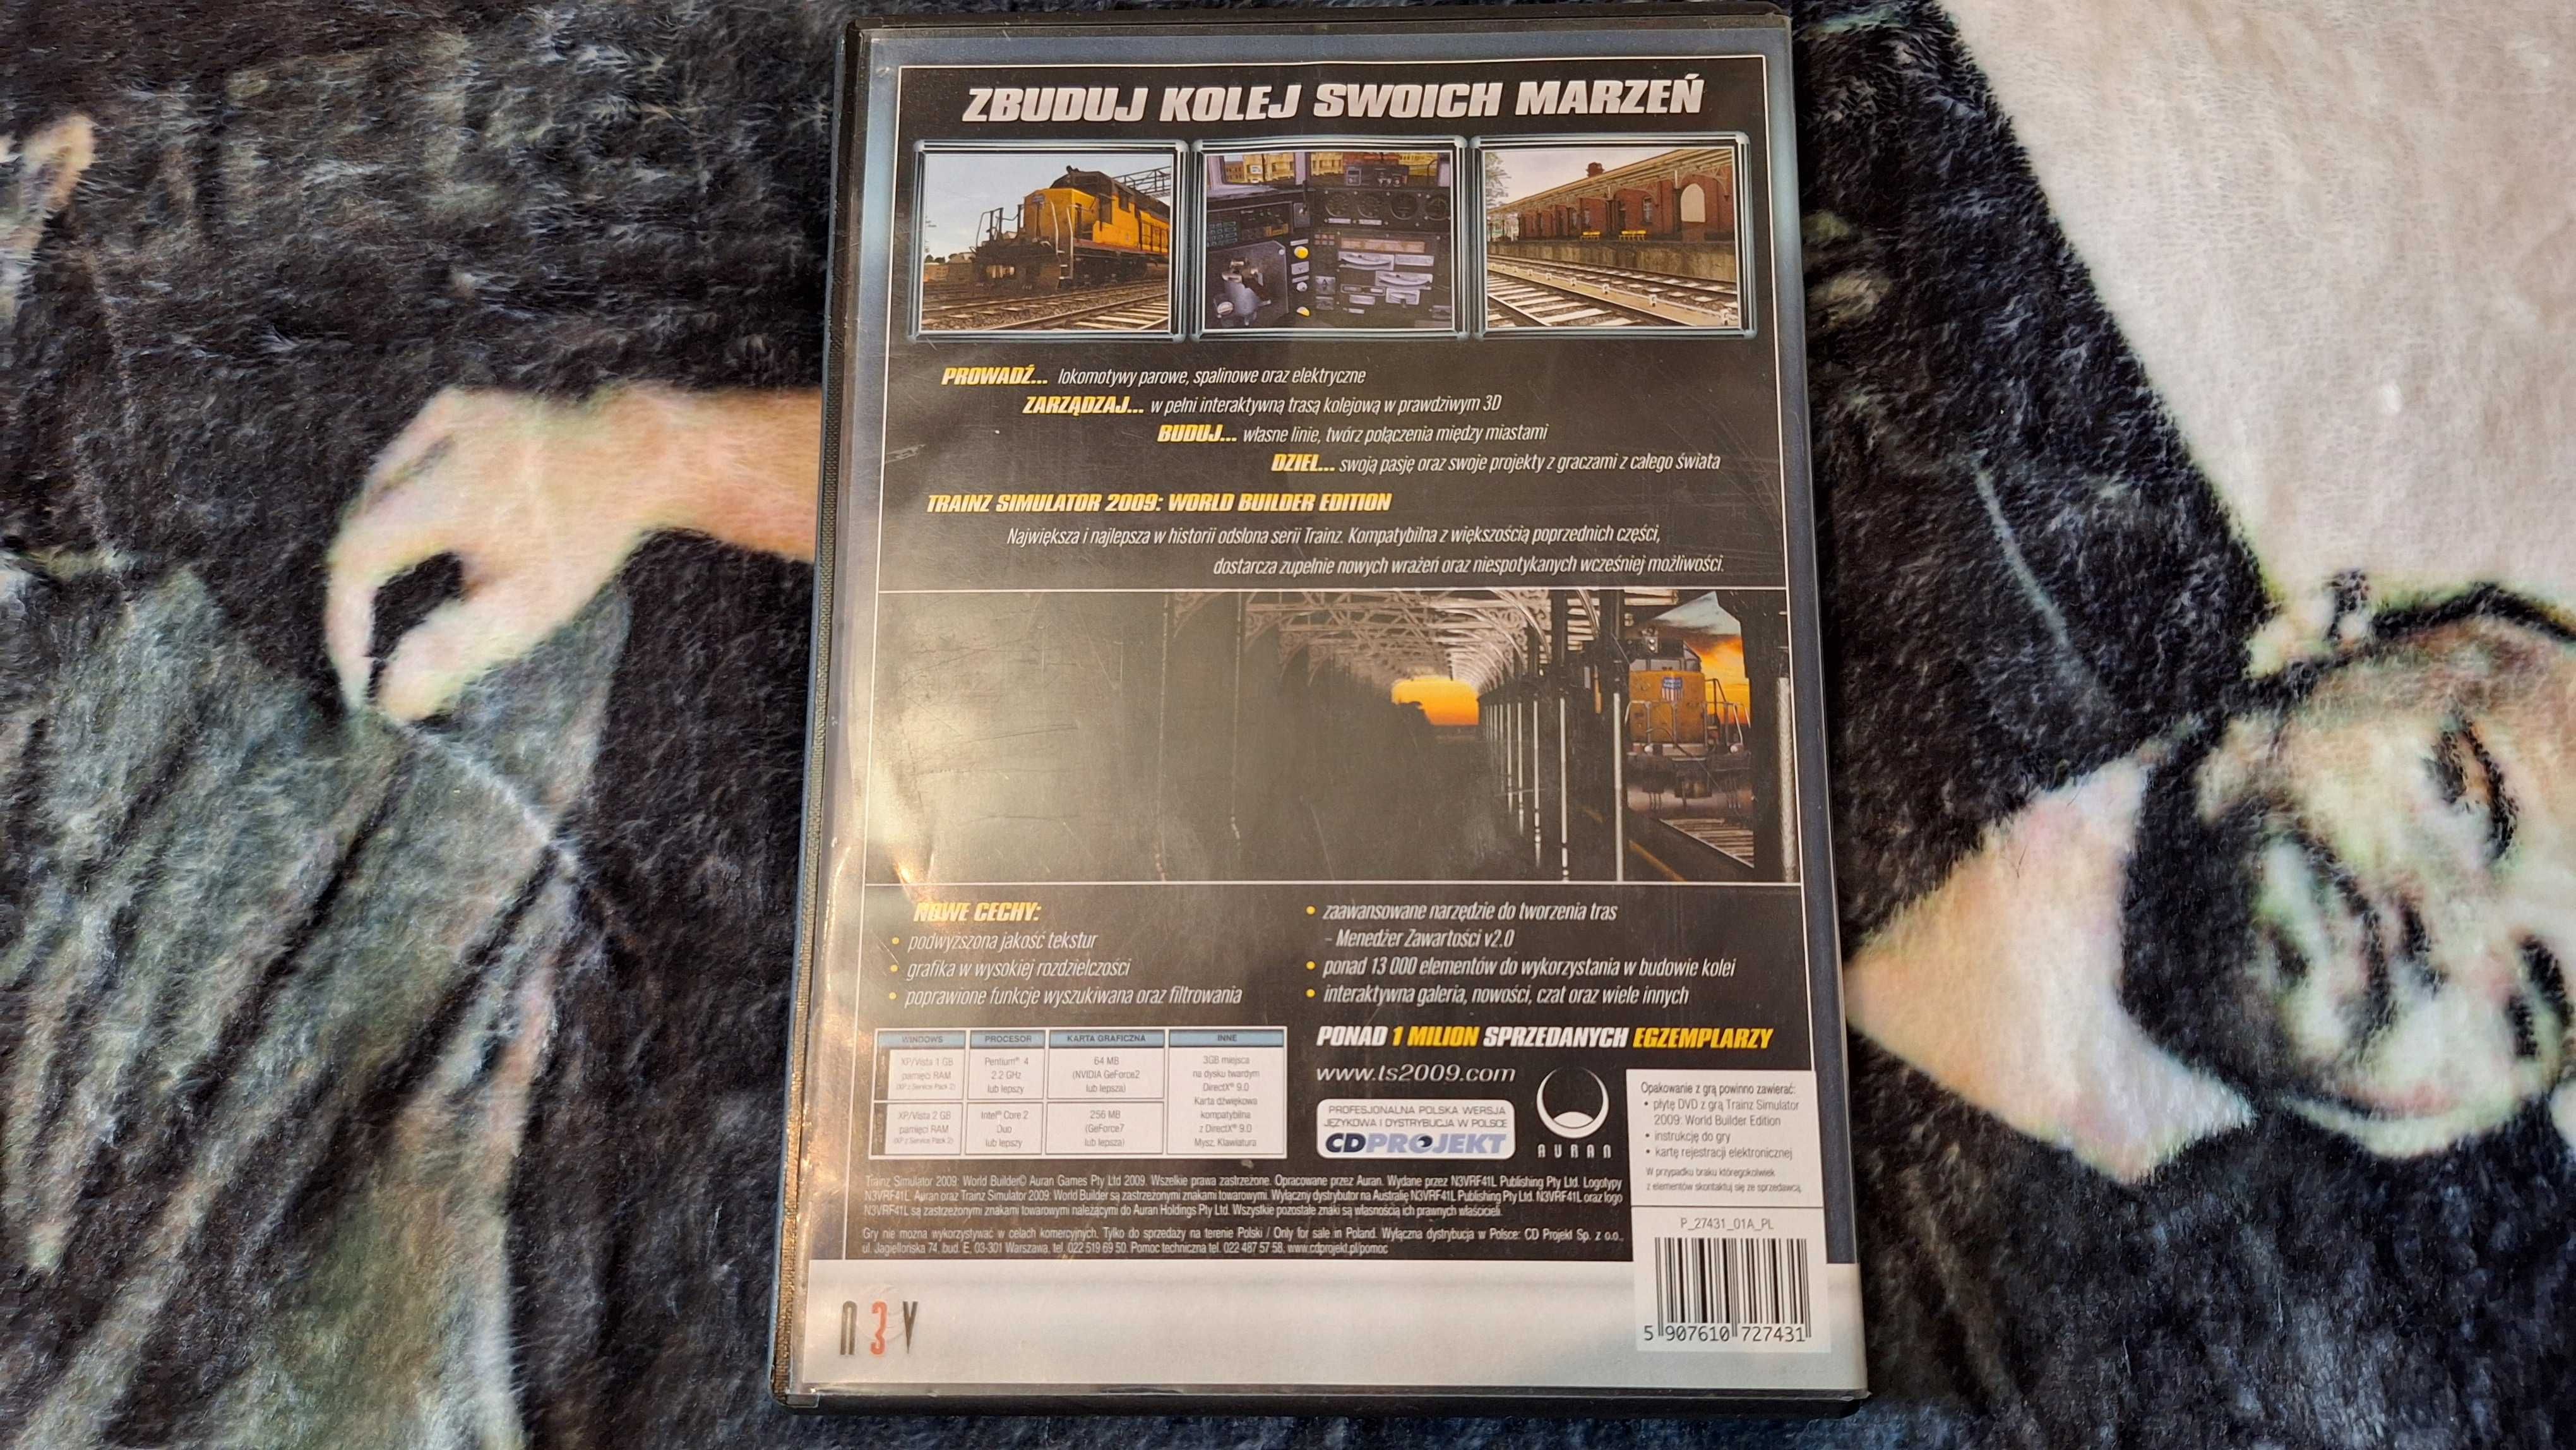 Gra Trainz Simulator 2009 World Builder Edition na PC w pełnej wersji